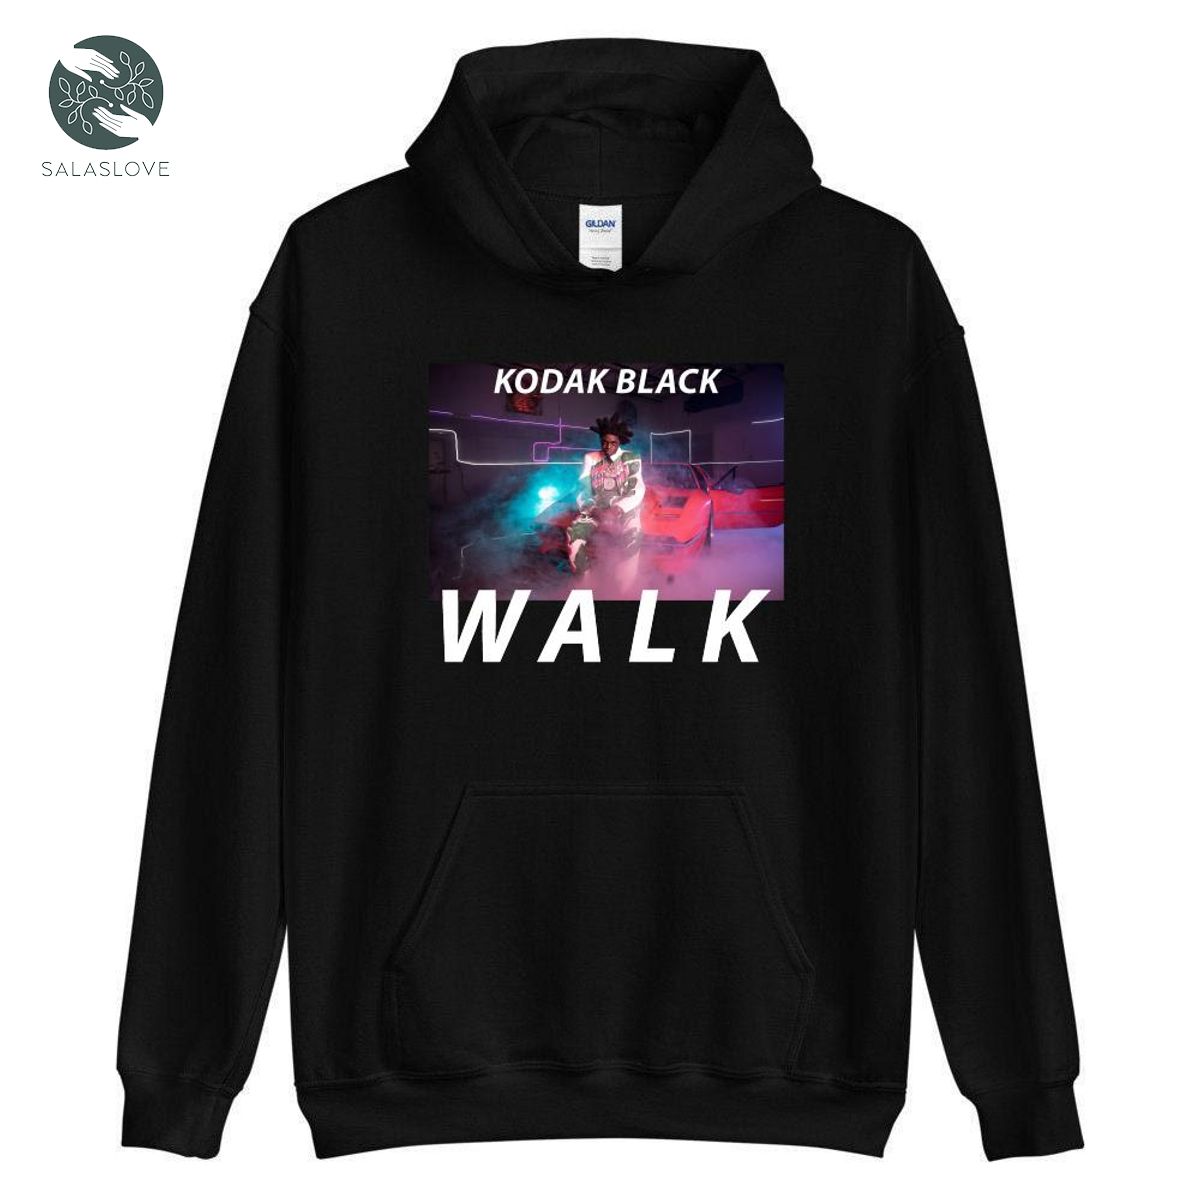 Kodak Black - Walk New Release Music Shirt